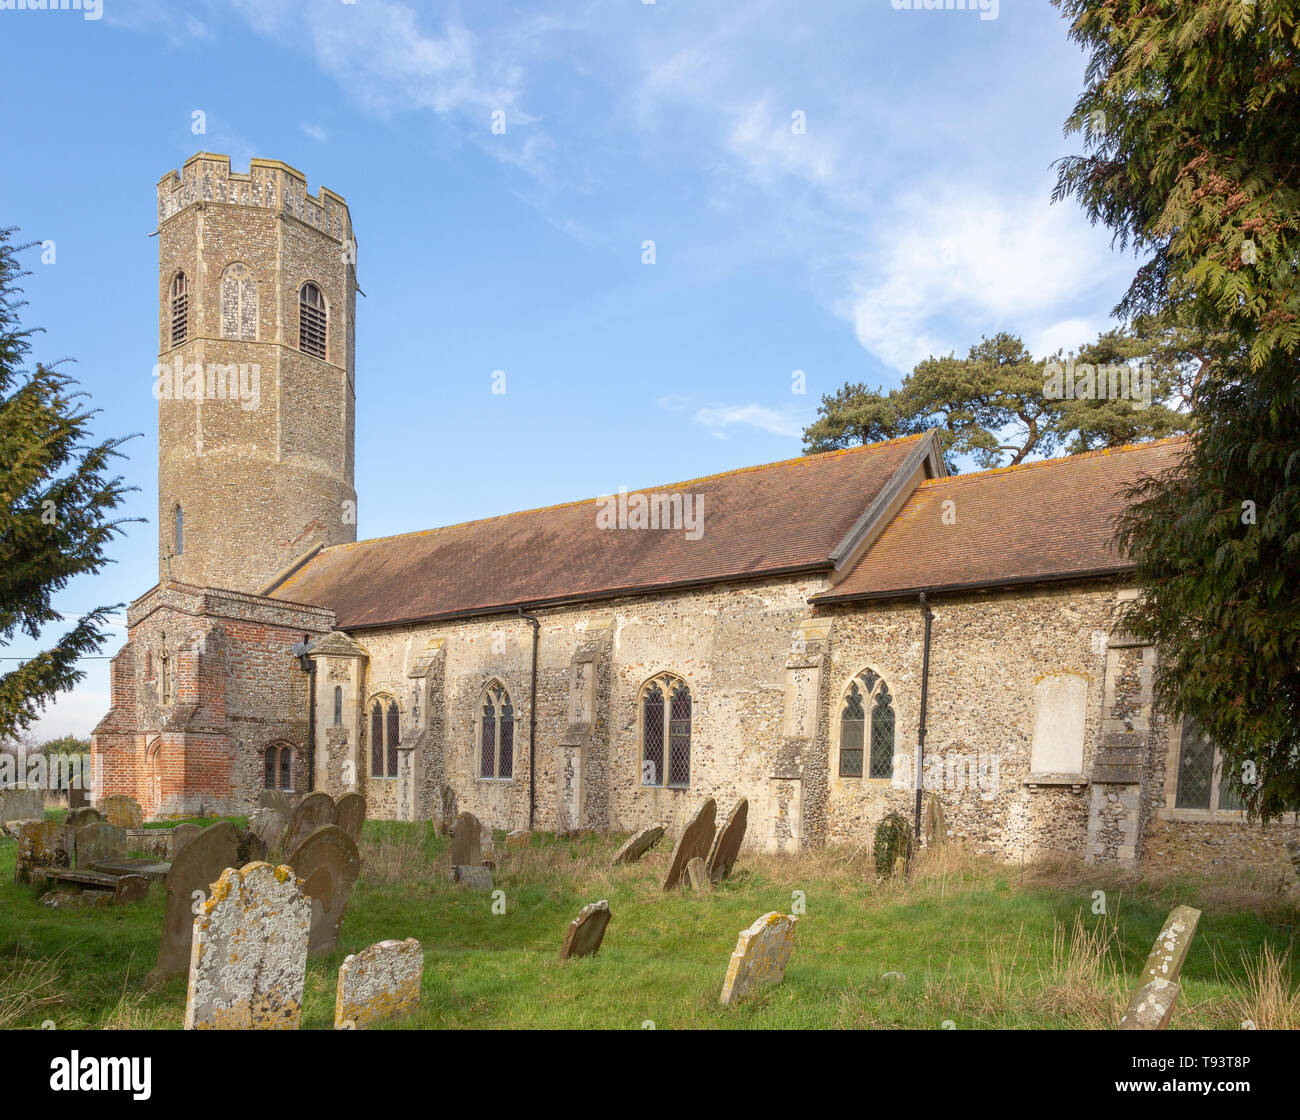 Church of Ilketshall St Andrew, Suffolk, England, UK Stock Photo